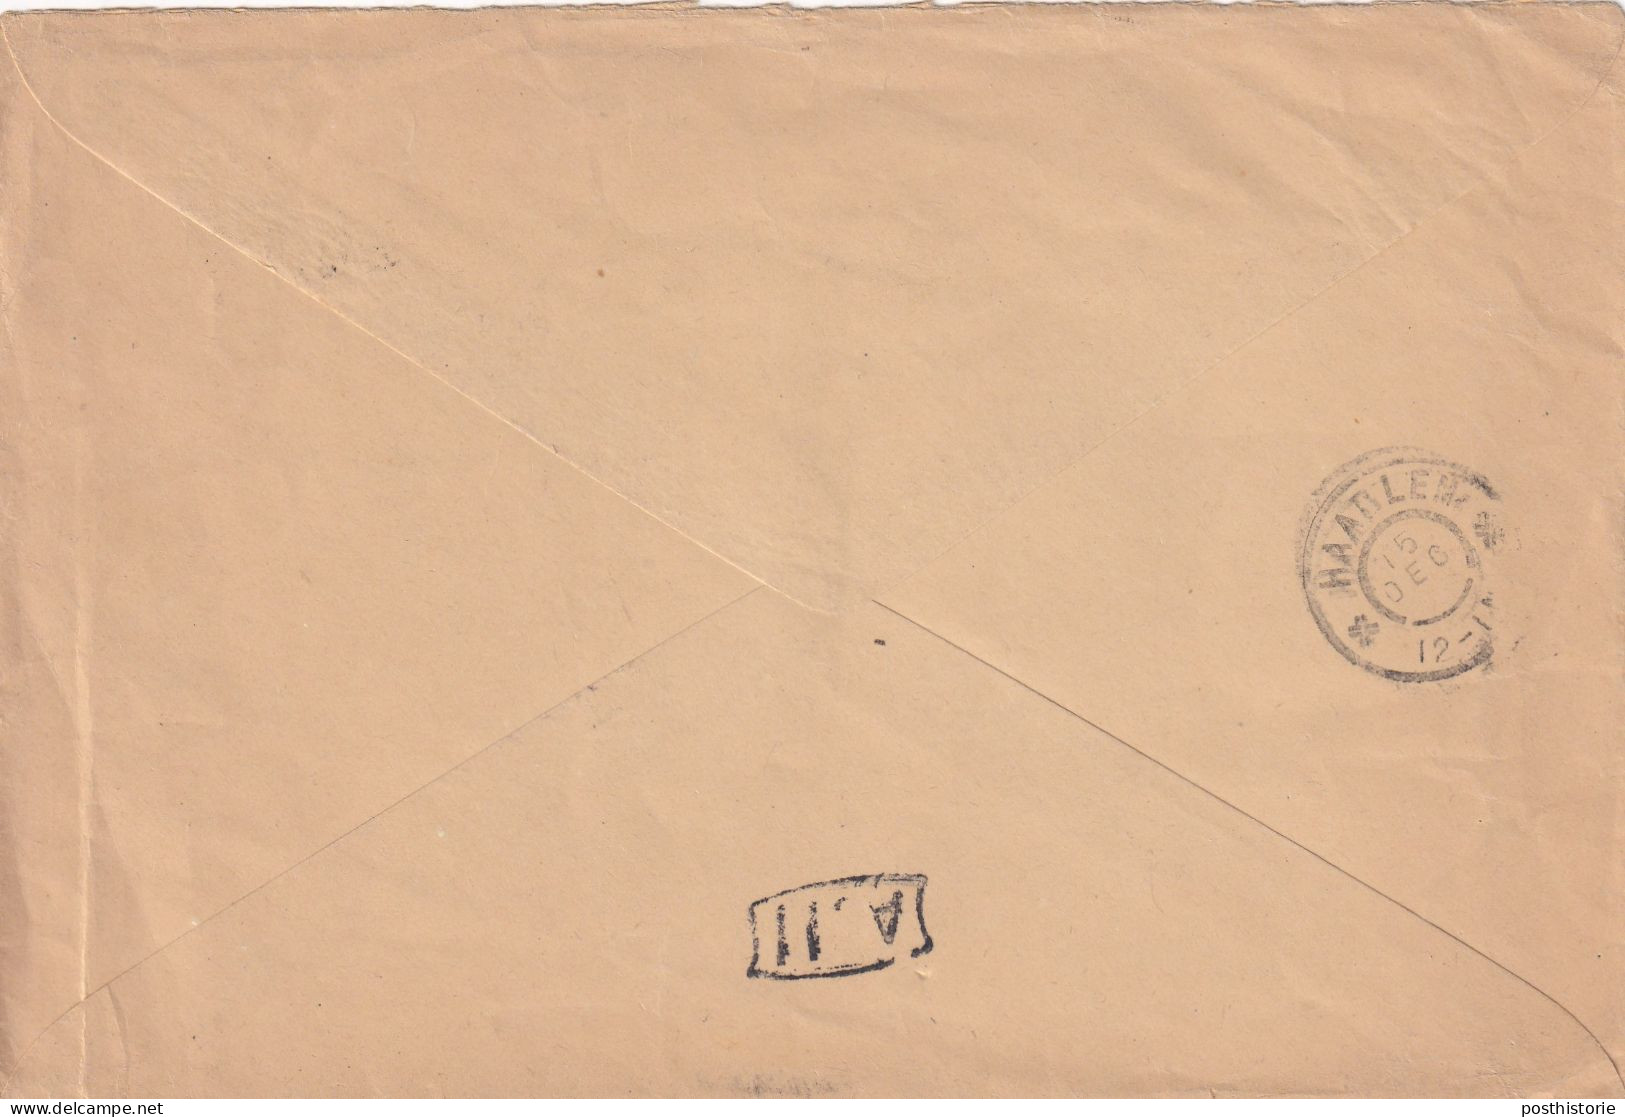 Envelop 15 Dec 1907 Arnhem Oldenzaal B (spoor Grootrond) Naar Haarlem (grootrond Zonder Jaartal) - Poststempel